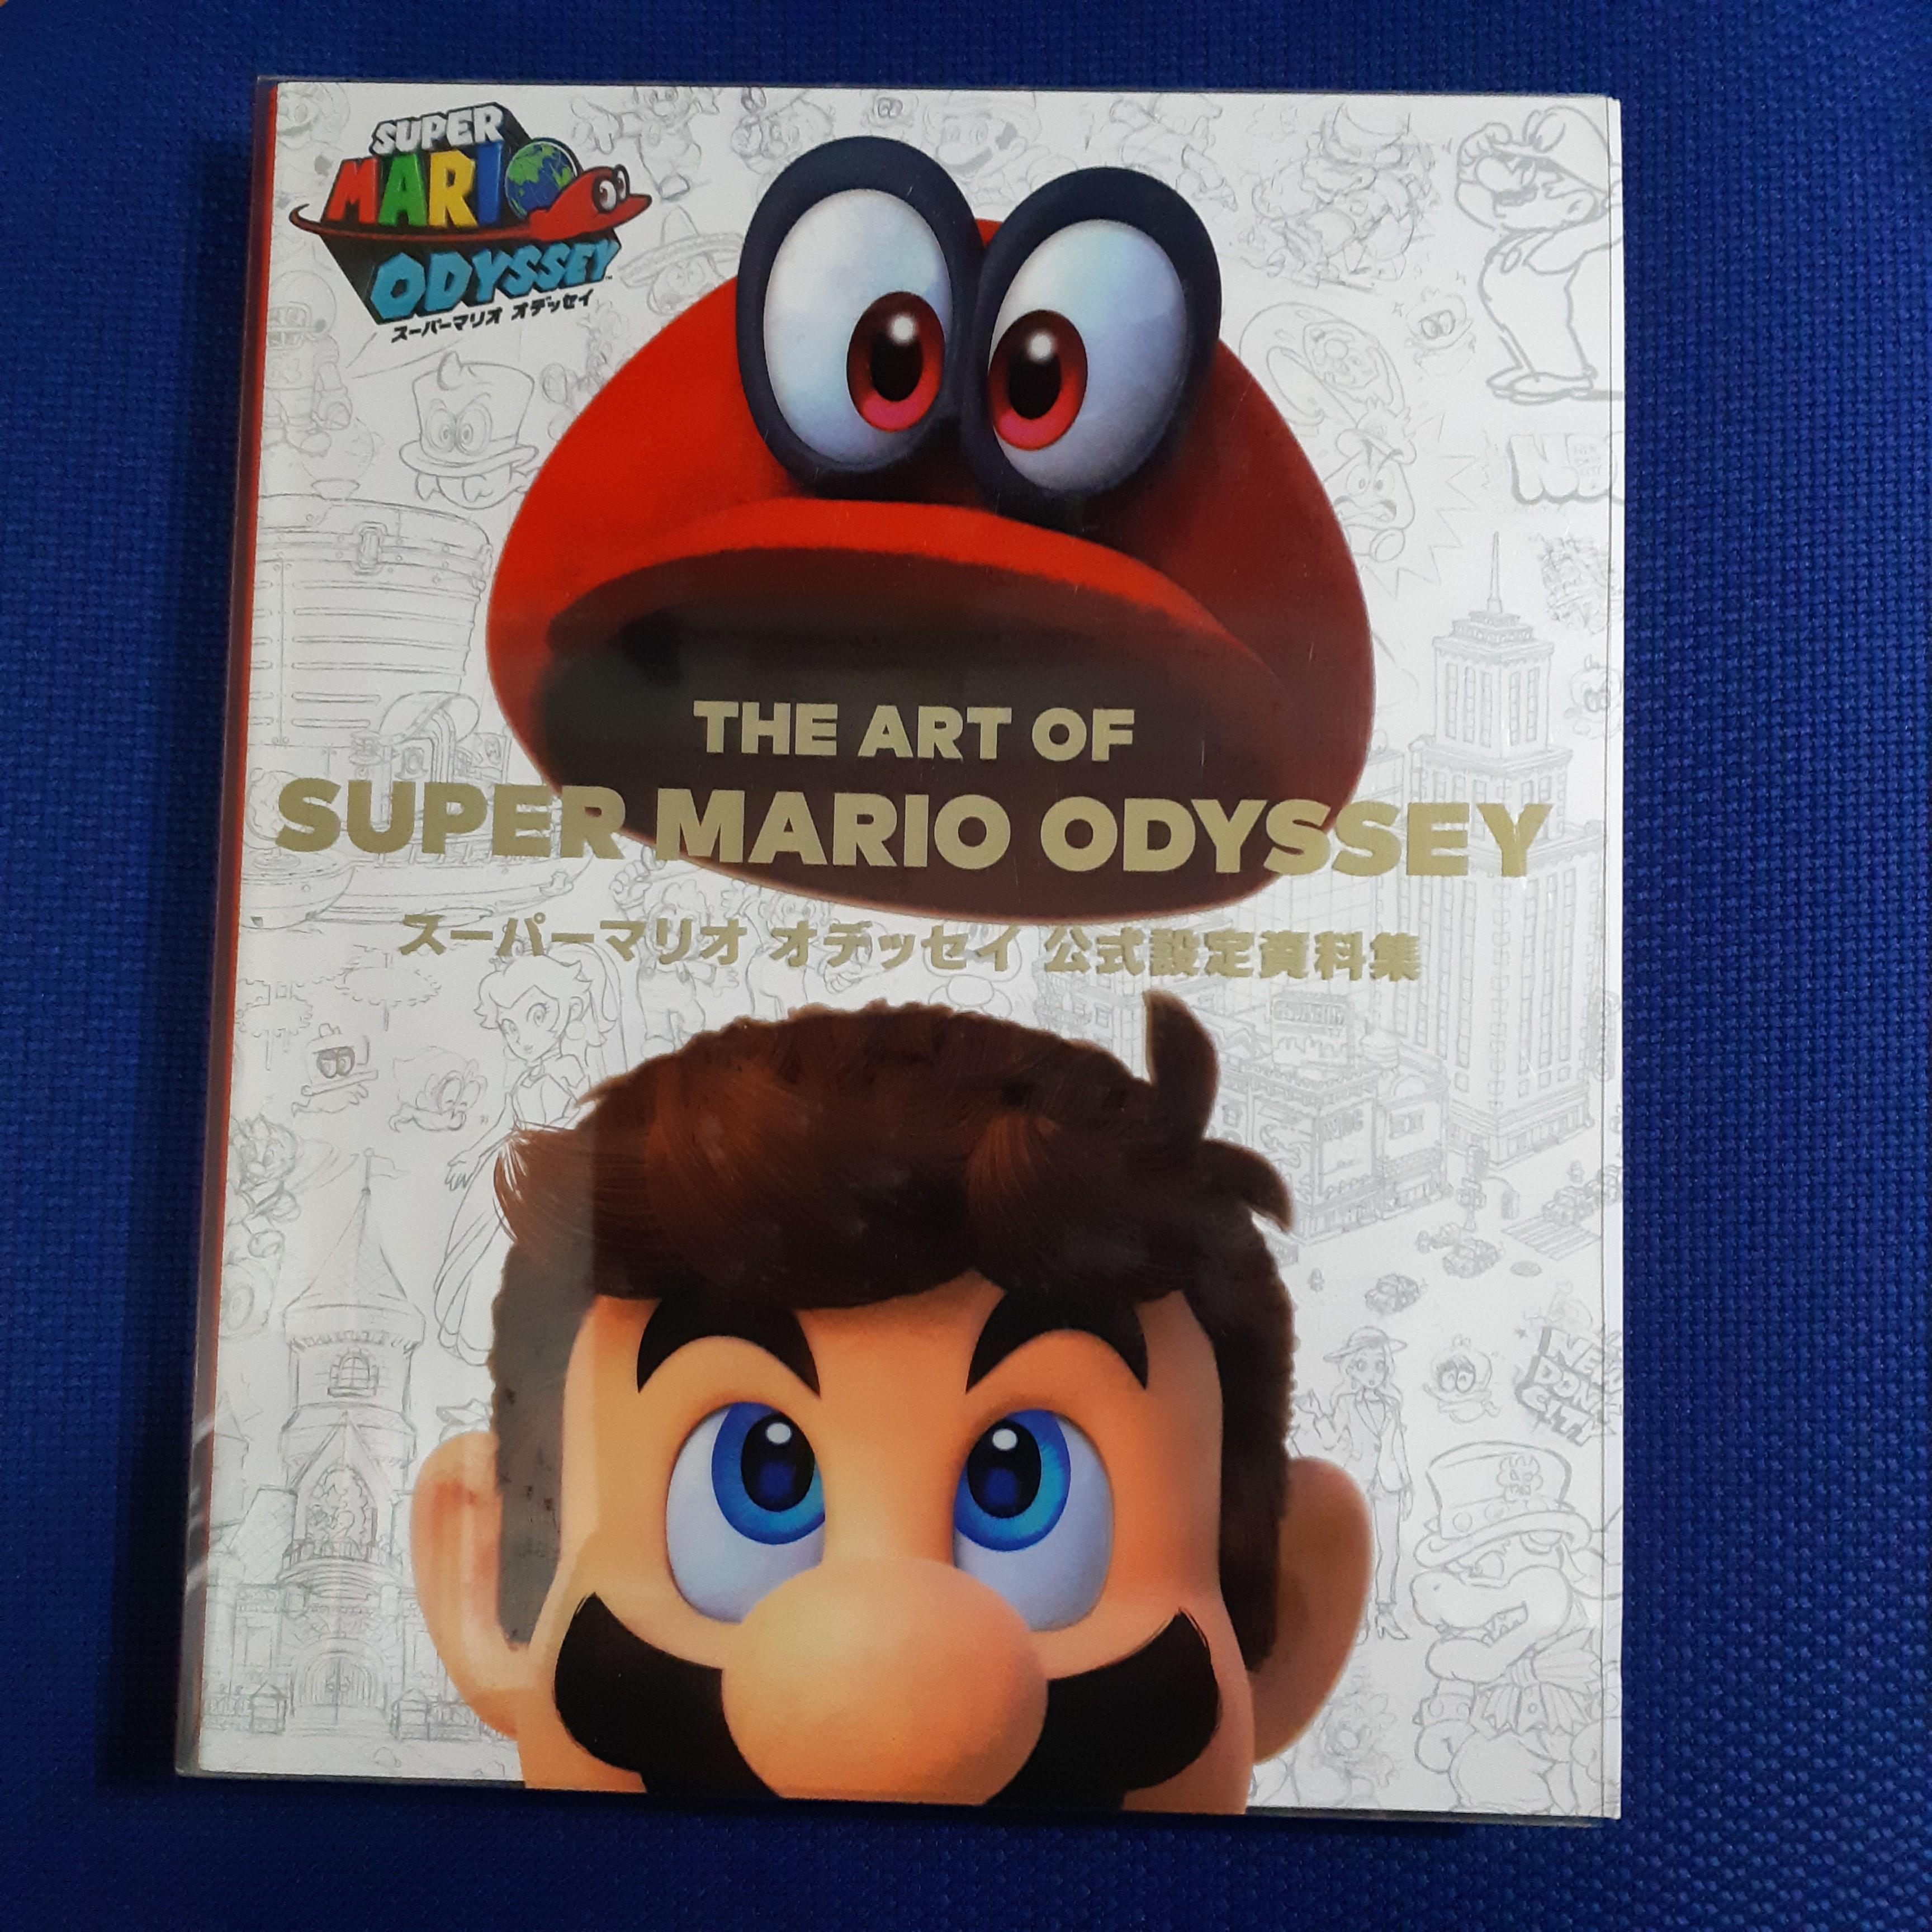 日本版The Art of Super Mario Odyssey 公式設定資料集, 興趣及遊戲